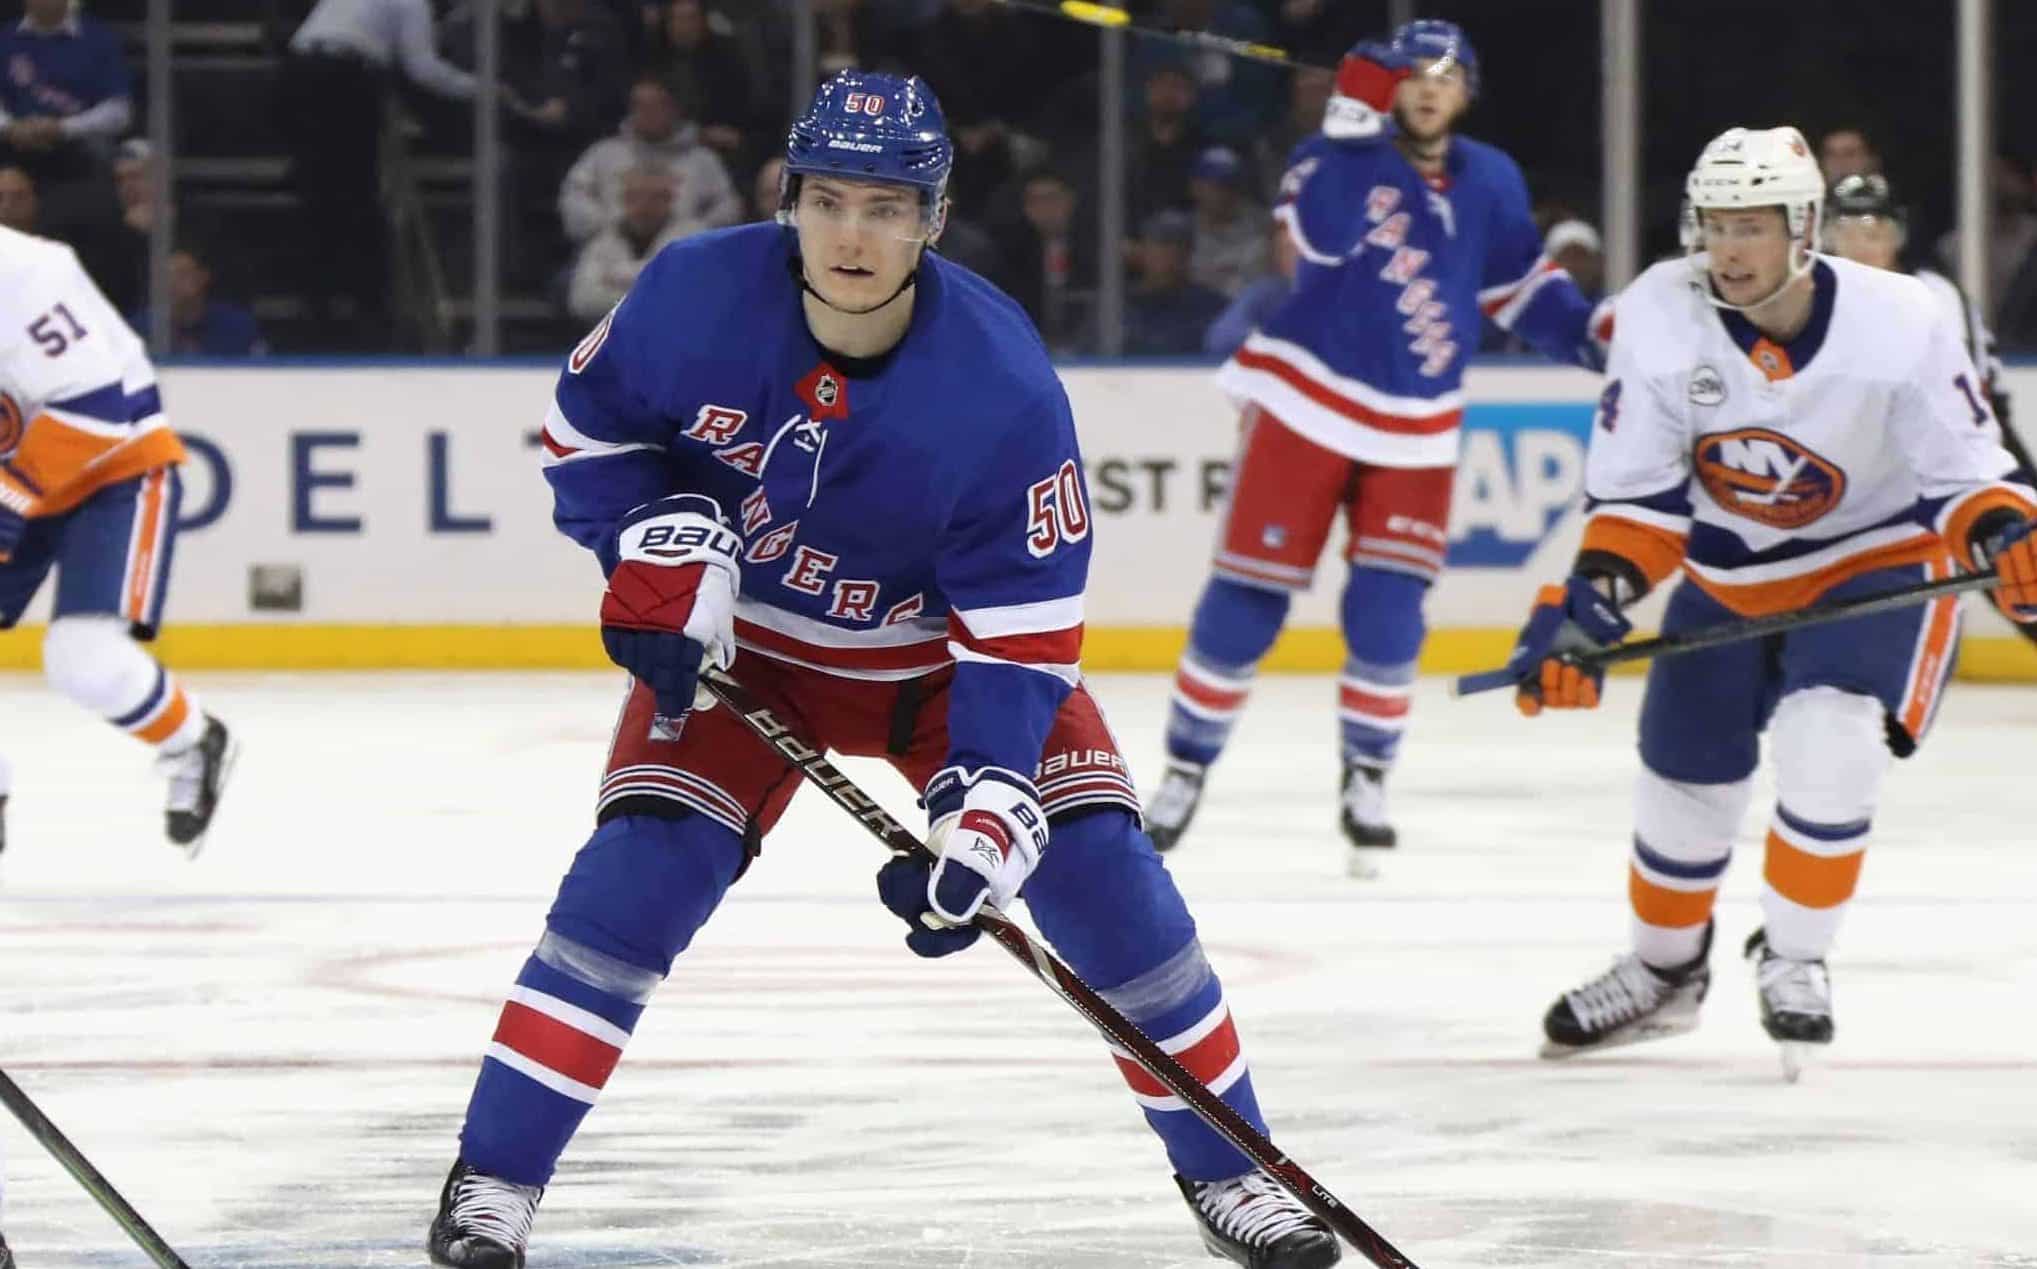 NEW YORK, NEW YORK - NOVEMBER 21: Lias Andersson #50 of the New York Rangers skates against the New York Islanders at Madison Square Garden on November 21, 2018 in New York City. The Rangers shut out the Islanders 5-0.